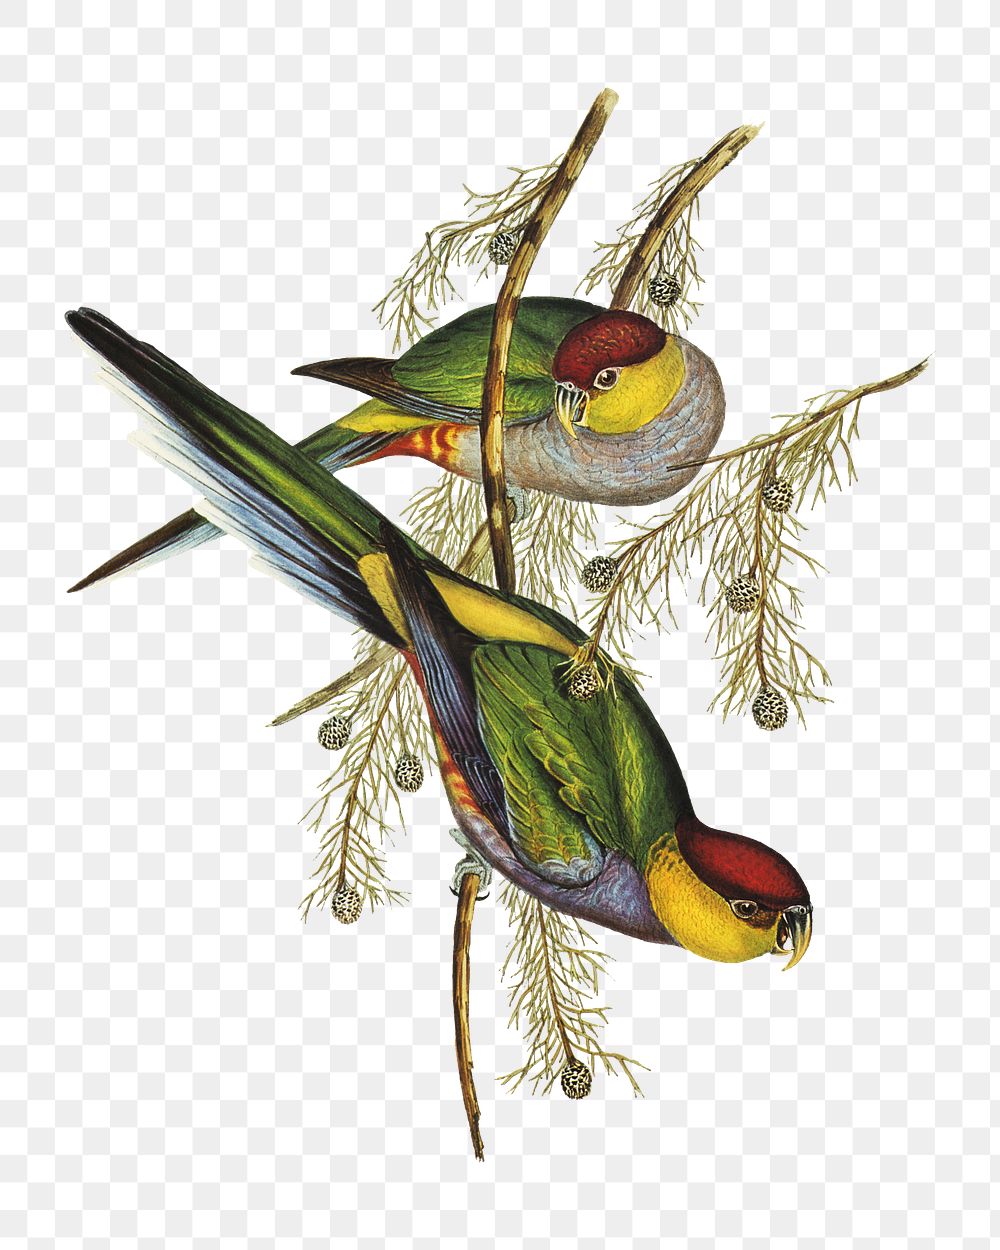 Red-capped parakeet png bird sticker, transparent background